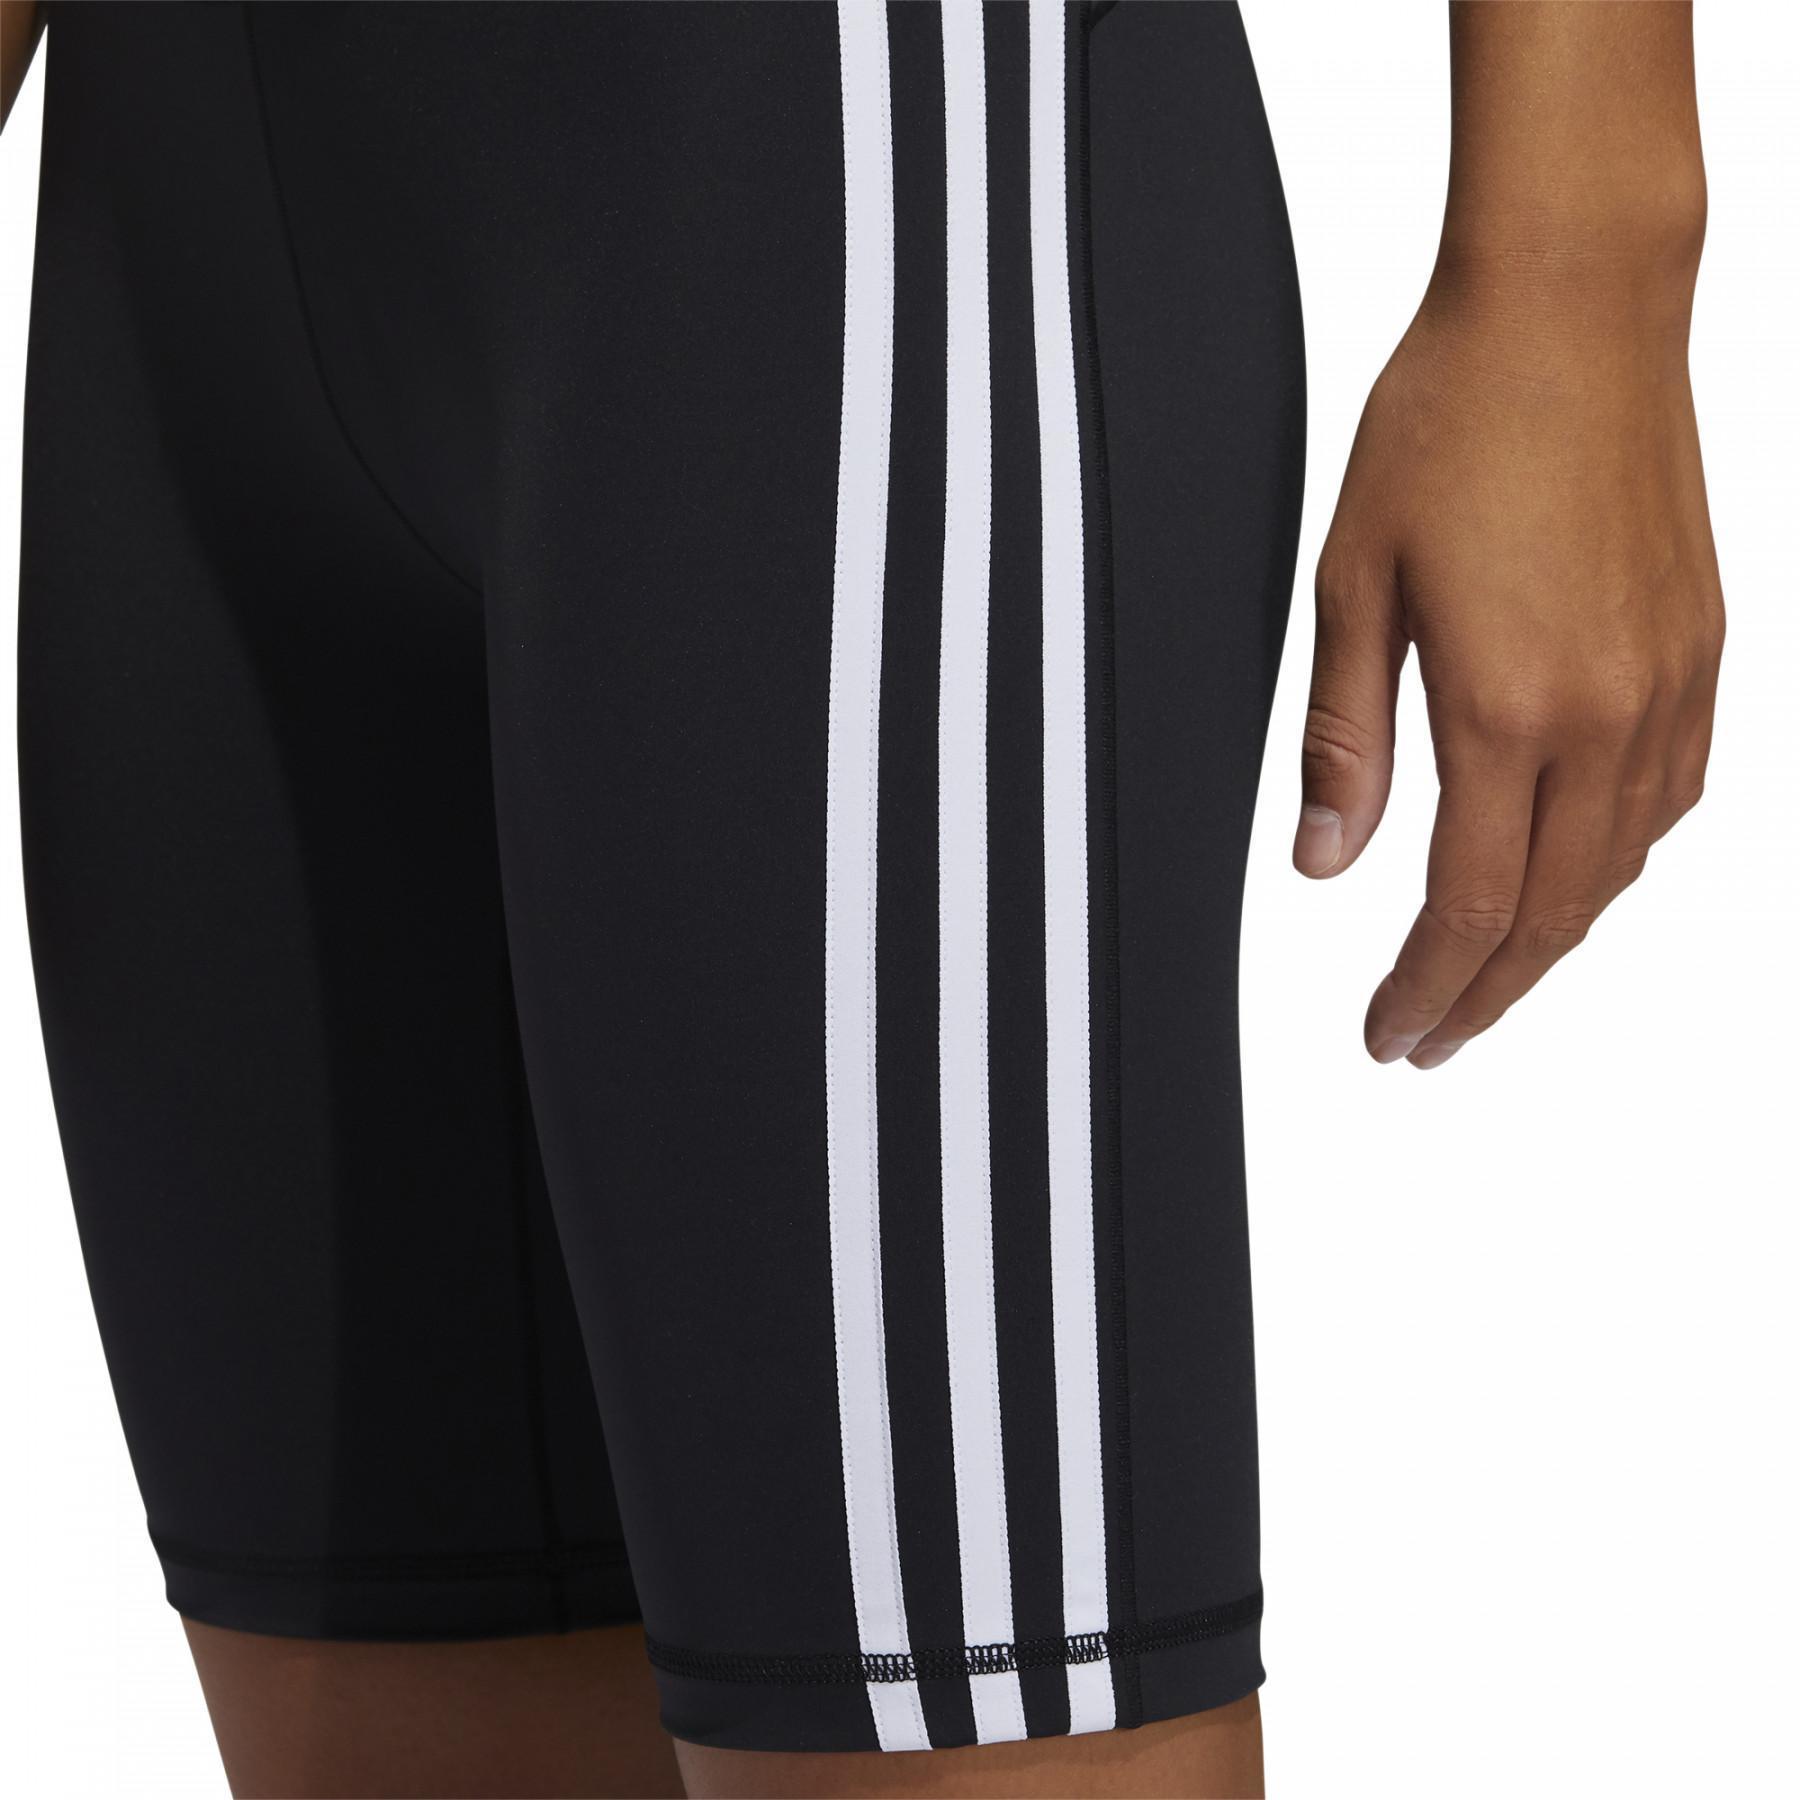 Kvinnlig cyklist adidas Believe These 2.0 3-Bandes